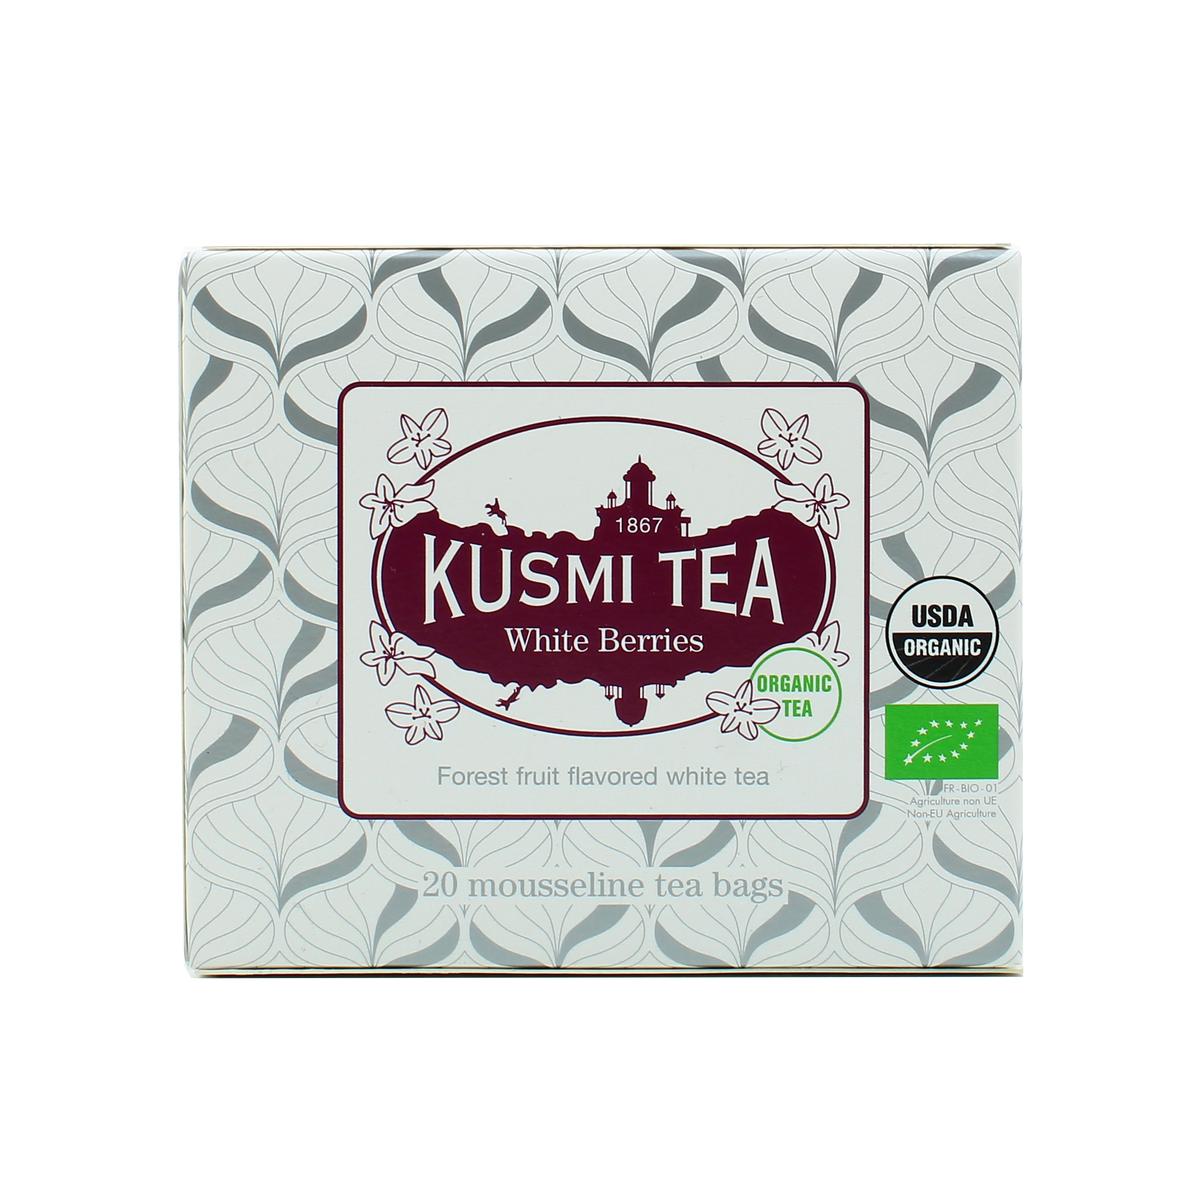 Acheter Kusmi Tea Detox Bio - Etui sachets mousseline 40g, 20 Sachets